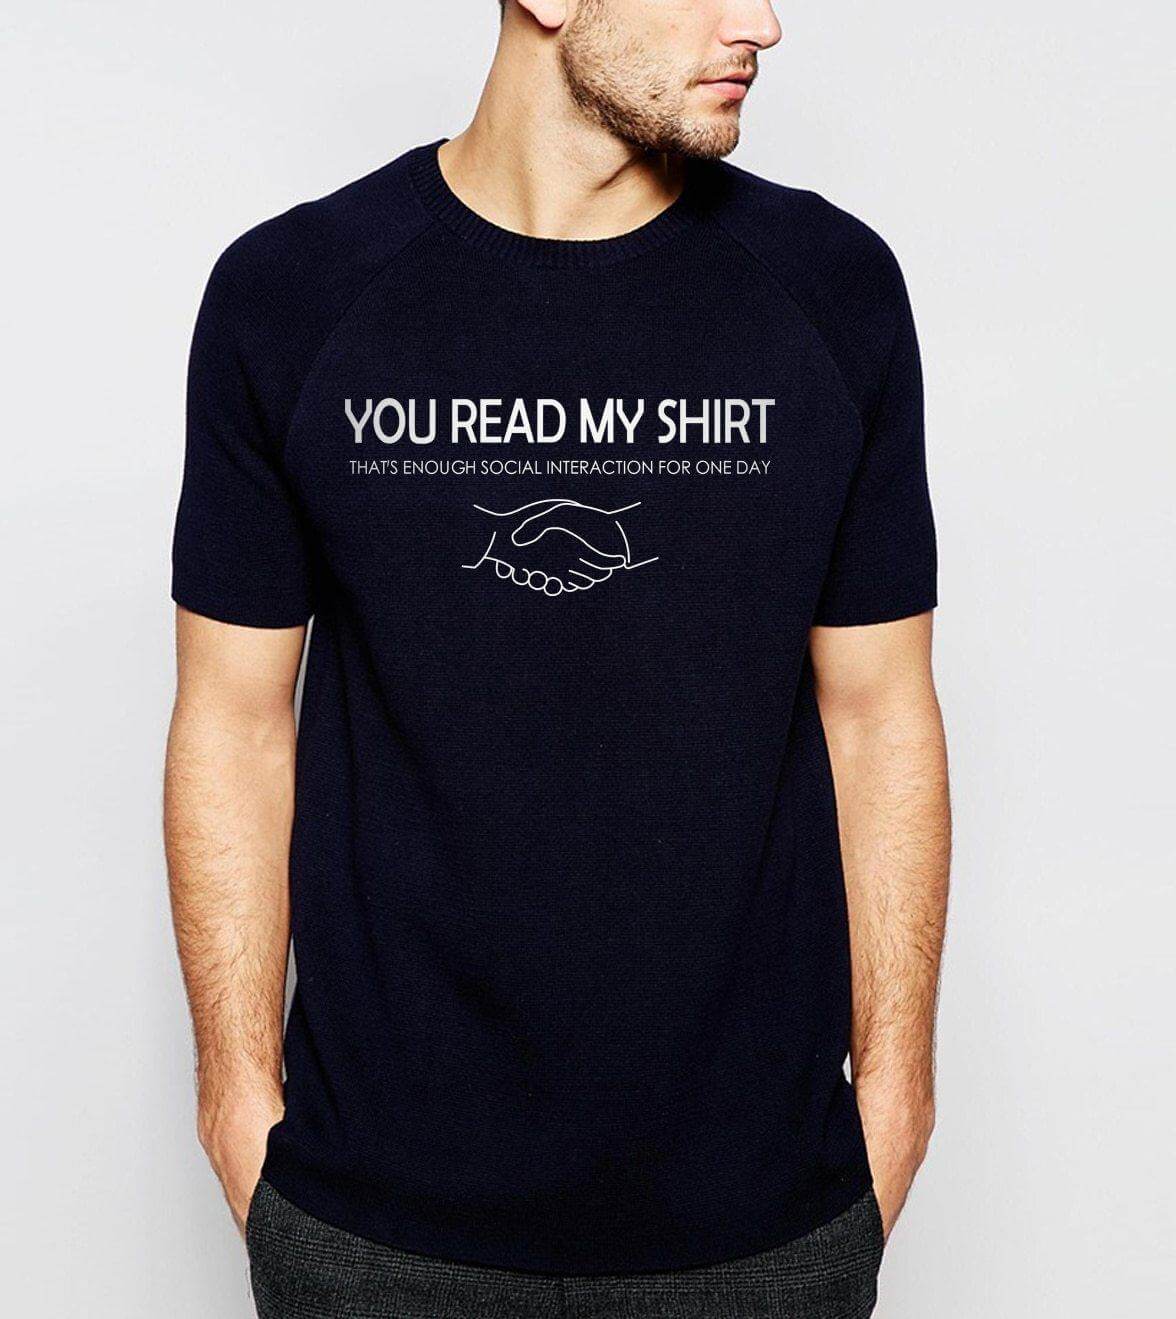 You read my t-shirt Funny T-shirt